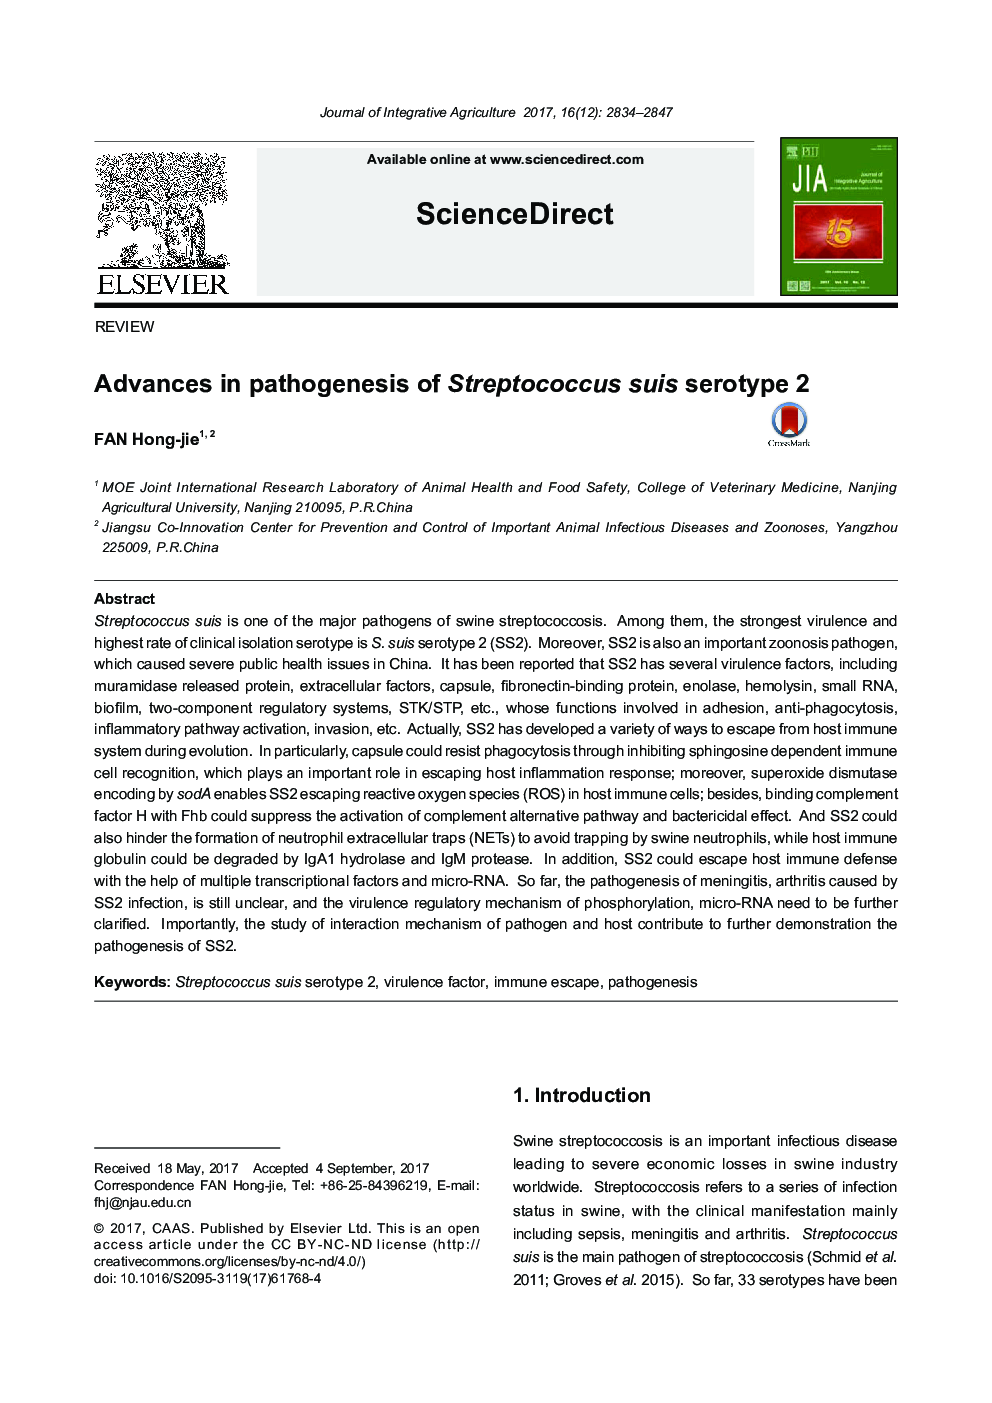 Advances in pathogenesis of Streptococcus suis serotype 2